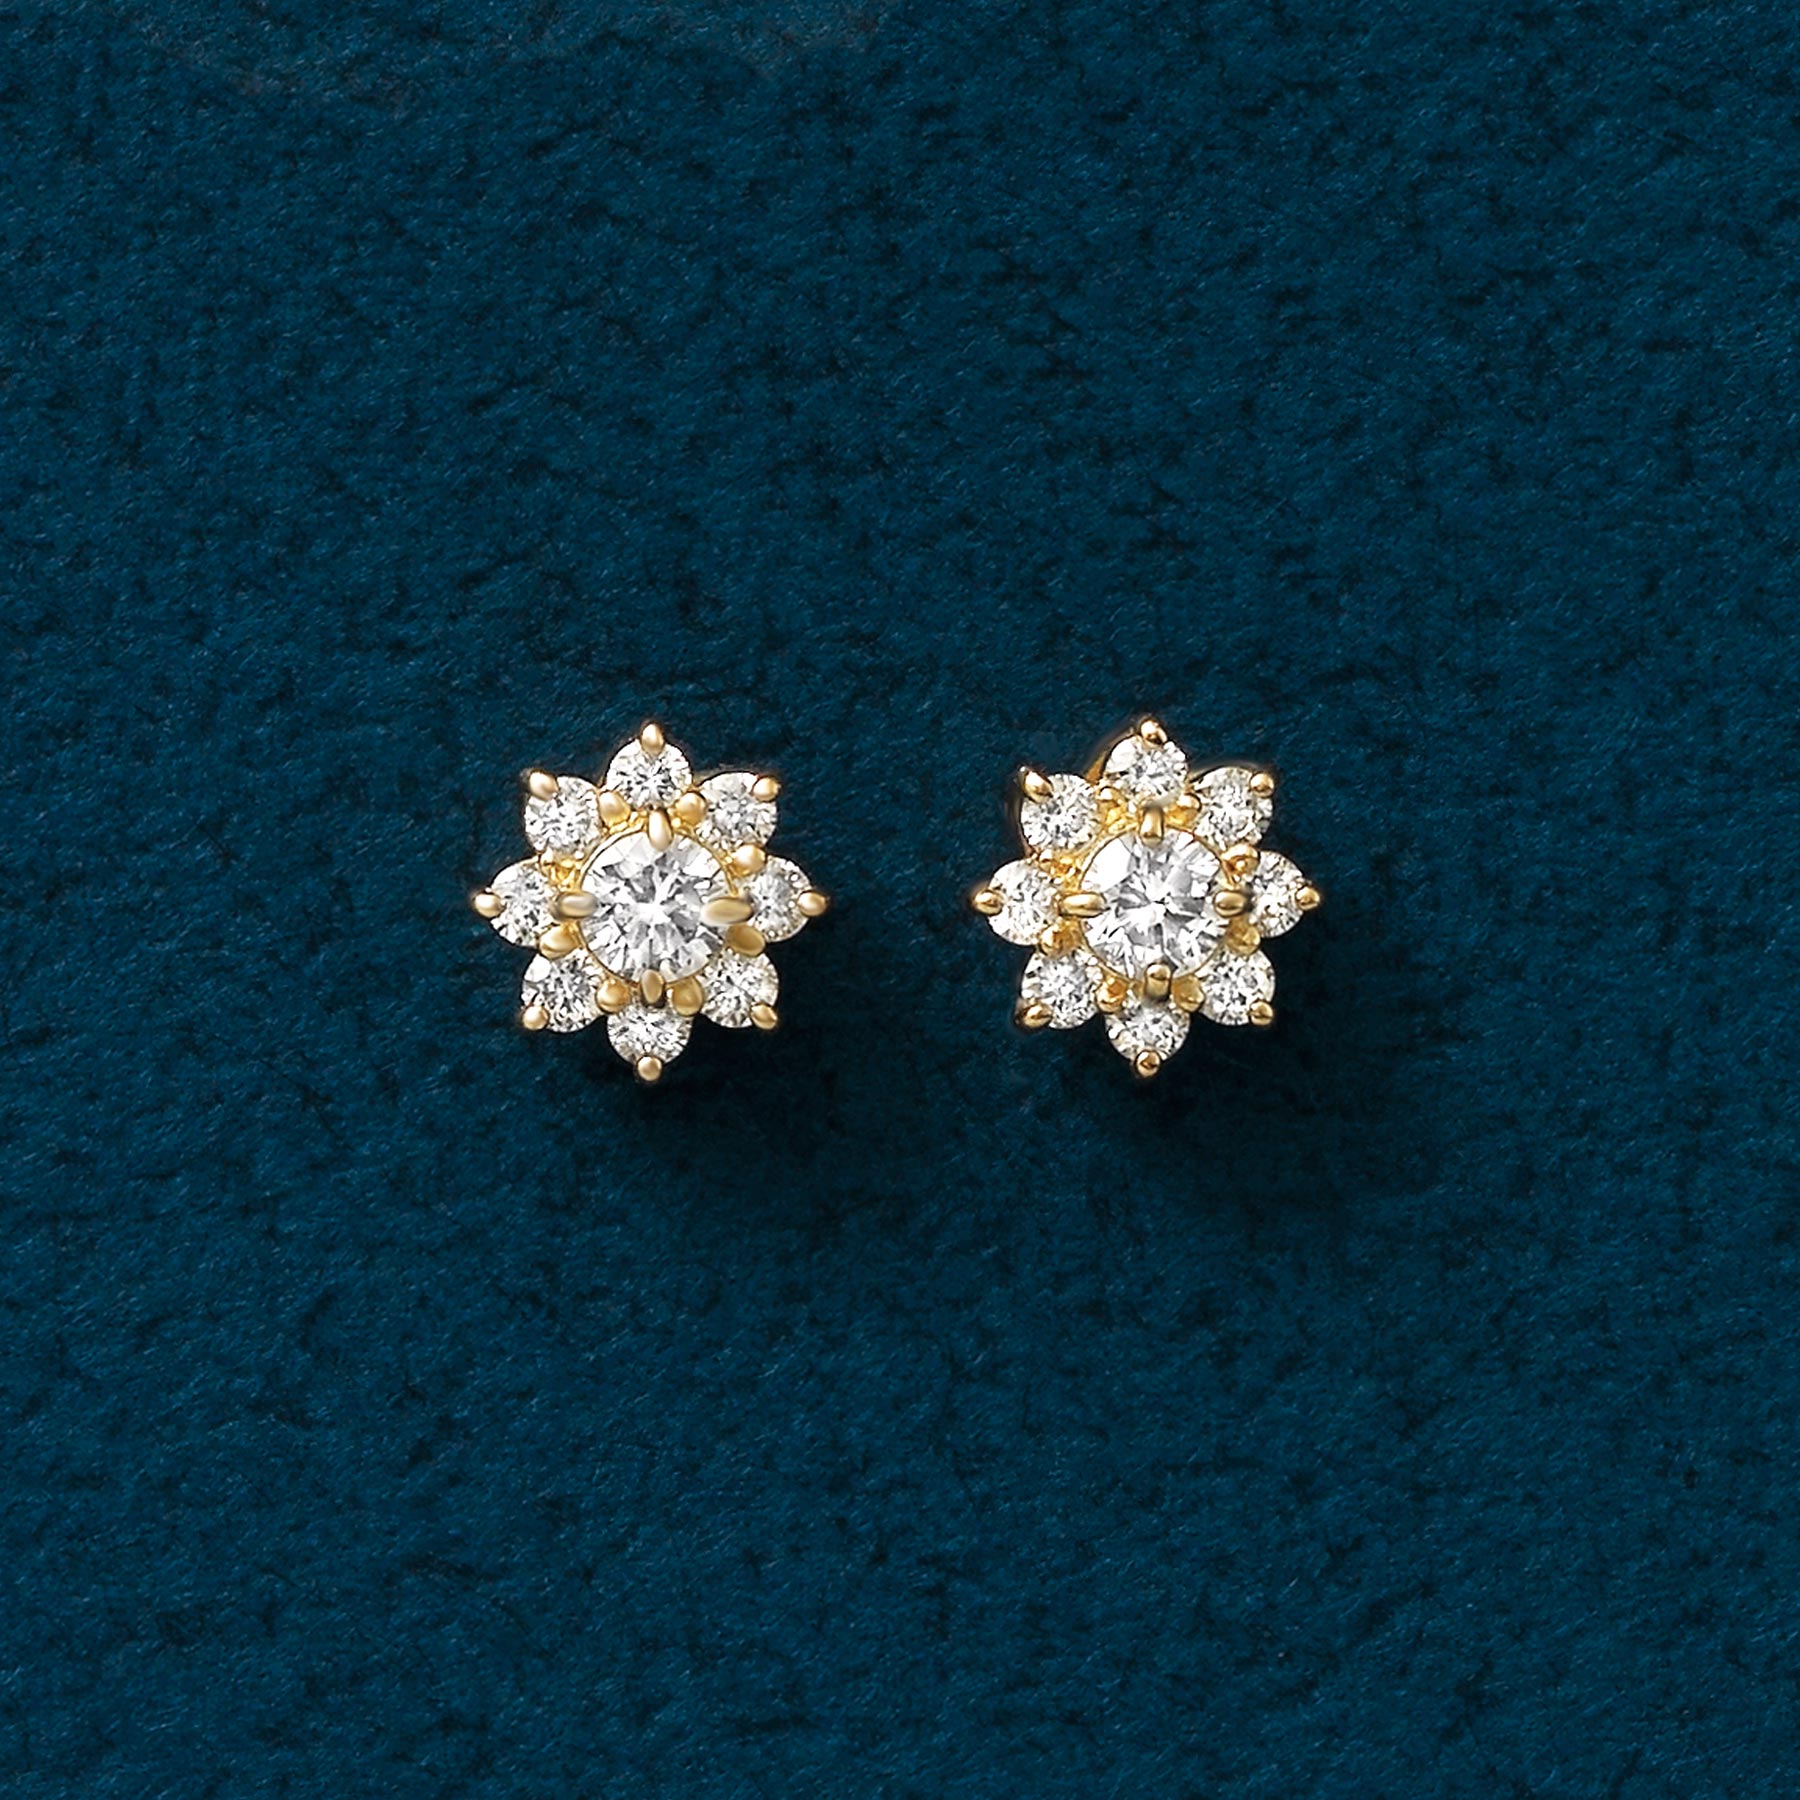 18K Yellow Gold Diamond Earrings [Lumiere] - Product Image